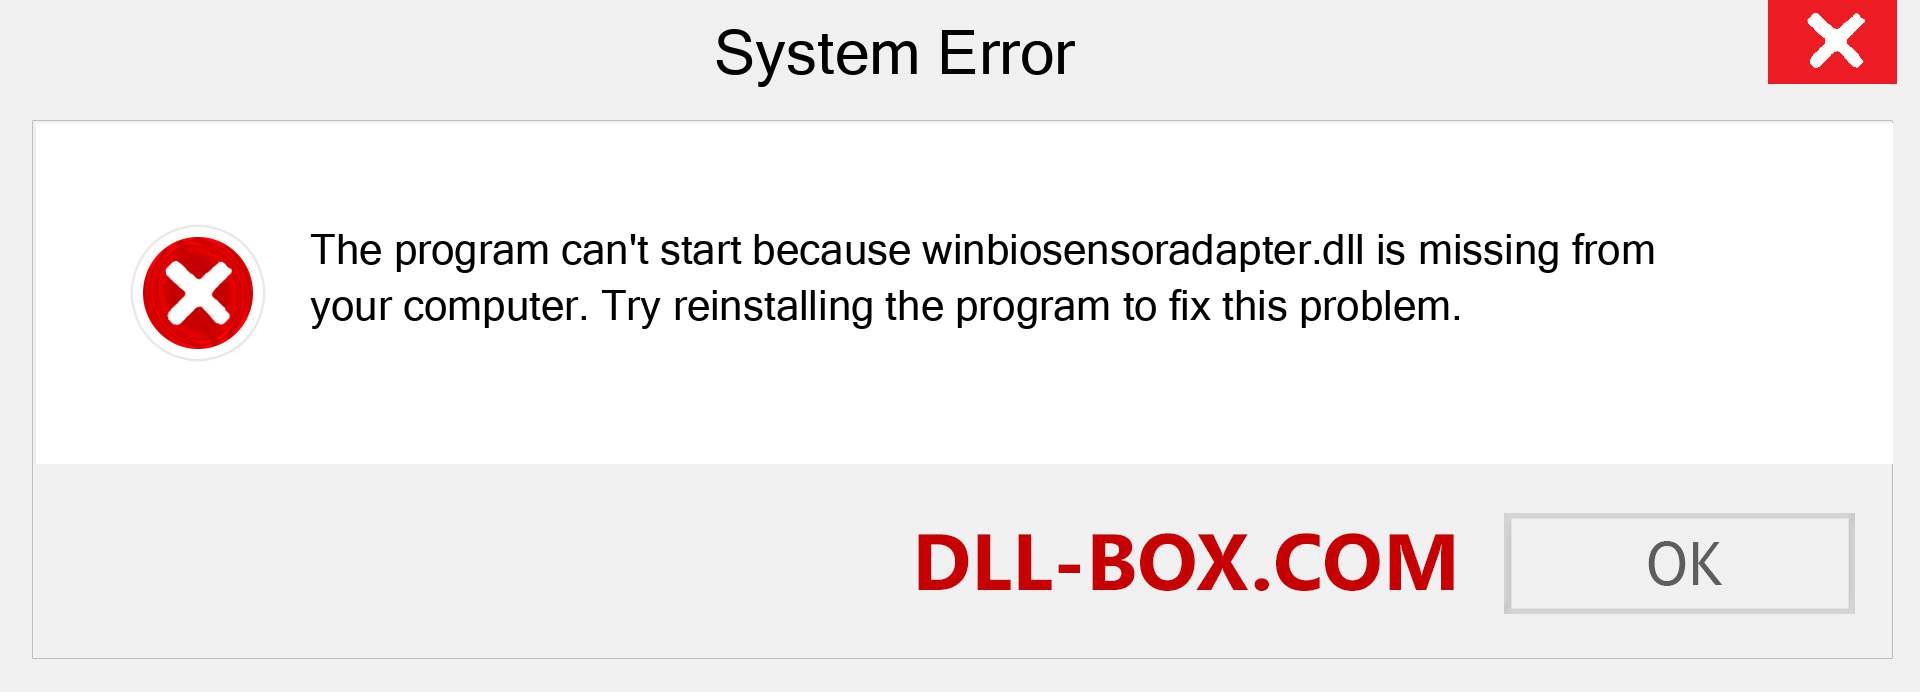  winbiosensoradapter.dll file is missing?. Download for Windows 7, 8, 10 - Fix  winbiosensoradapter dll Missing Error on Windows, photos, images